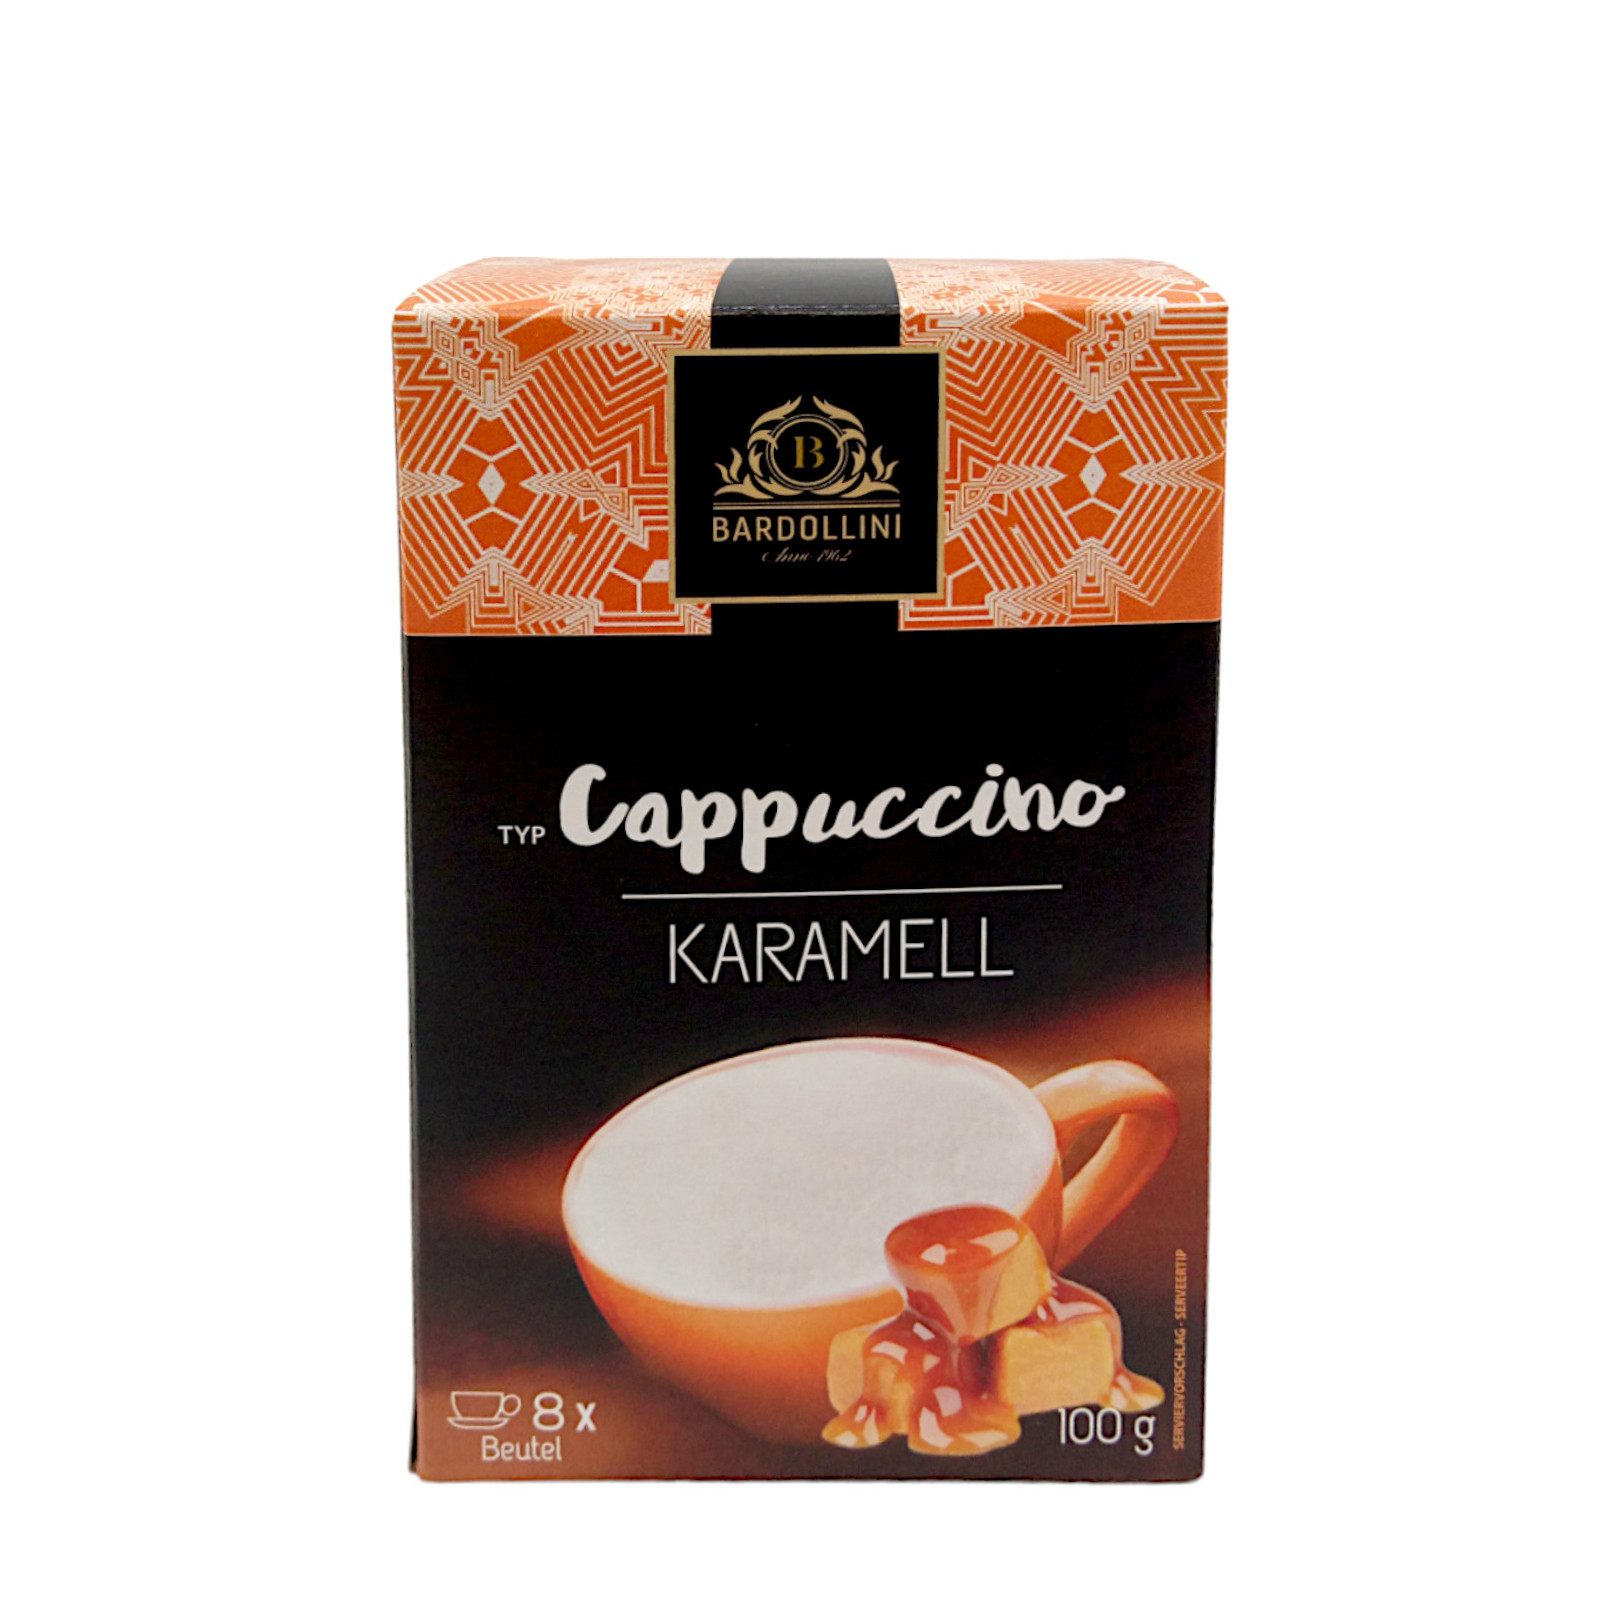 Bardollini Cappuccino Caramel 100g